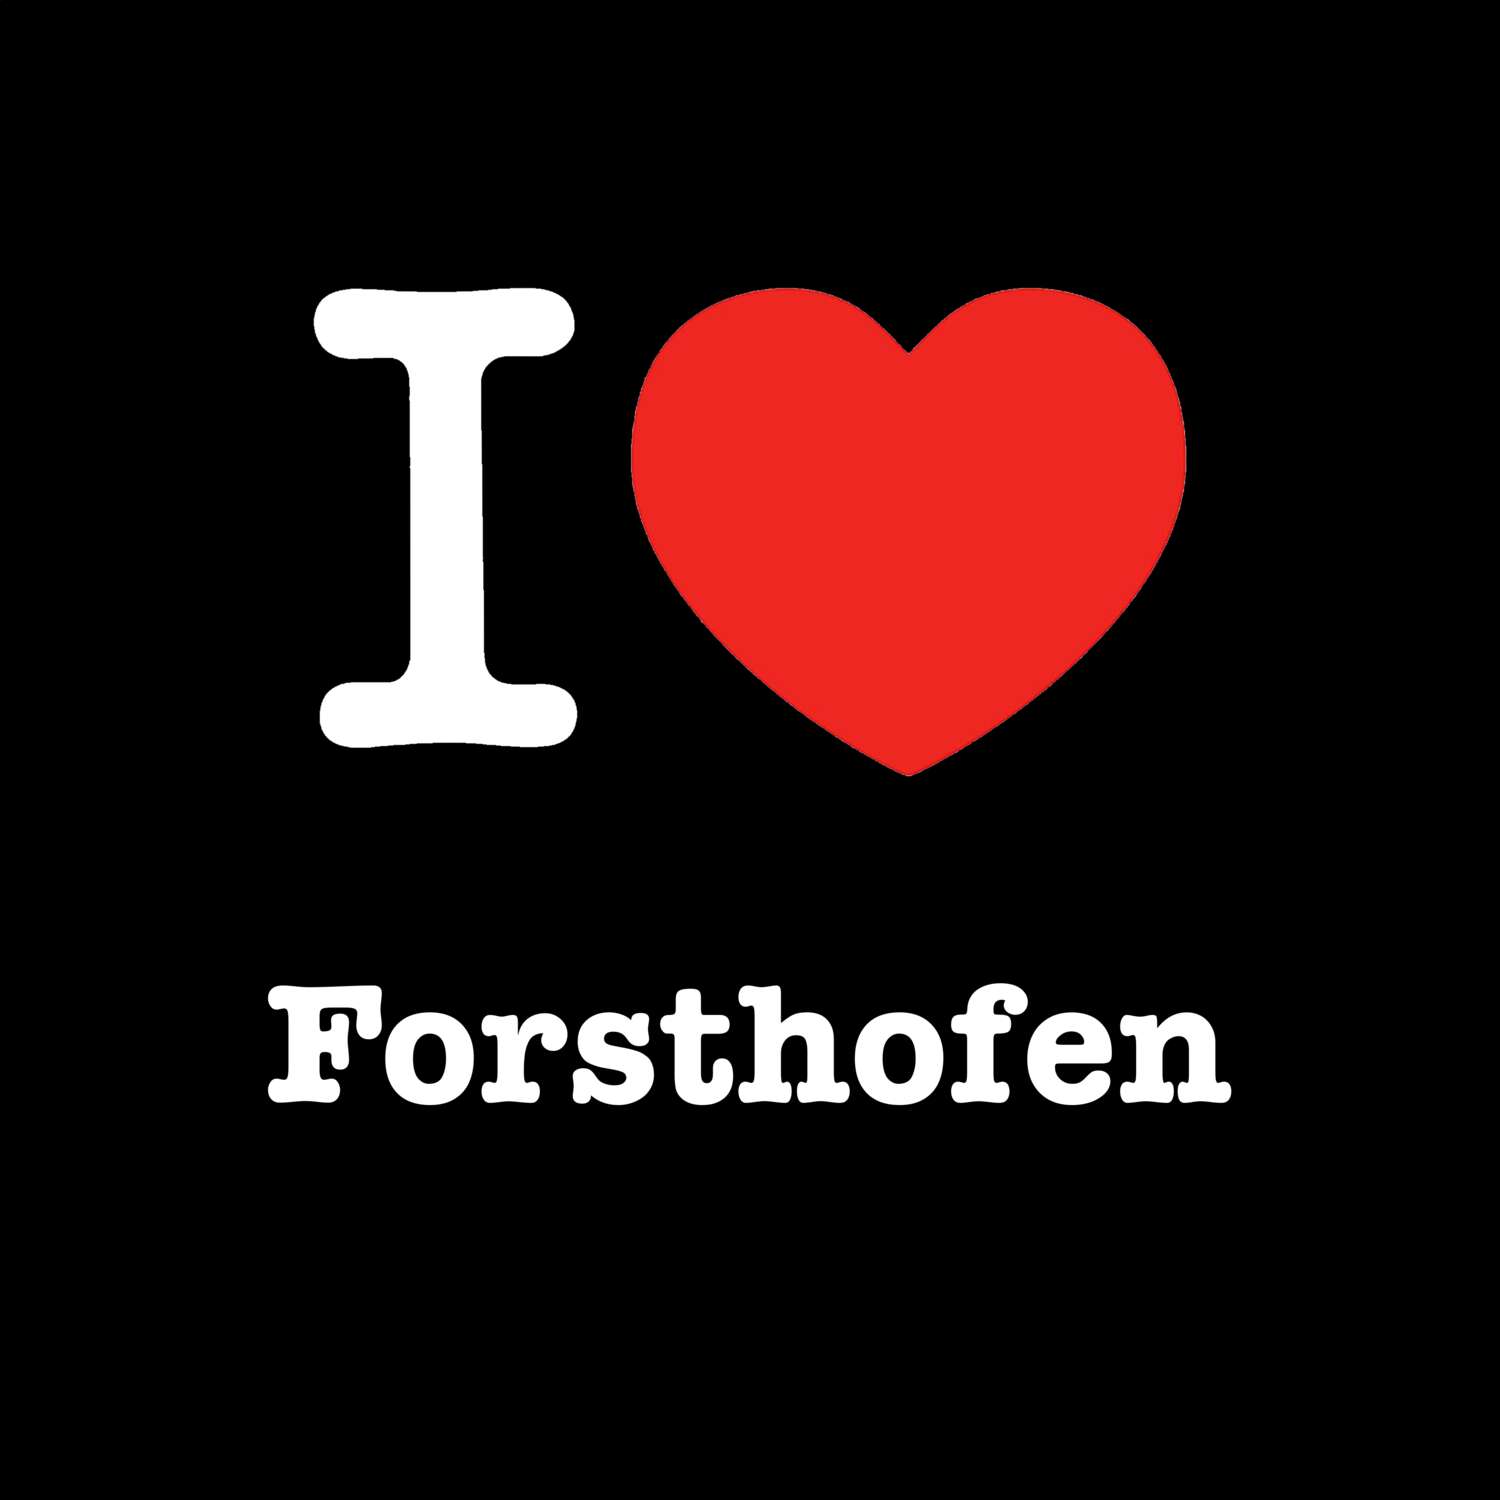 Forsthofen T-Shirt »I love«